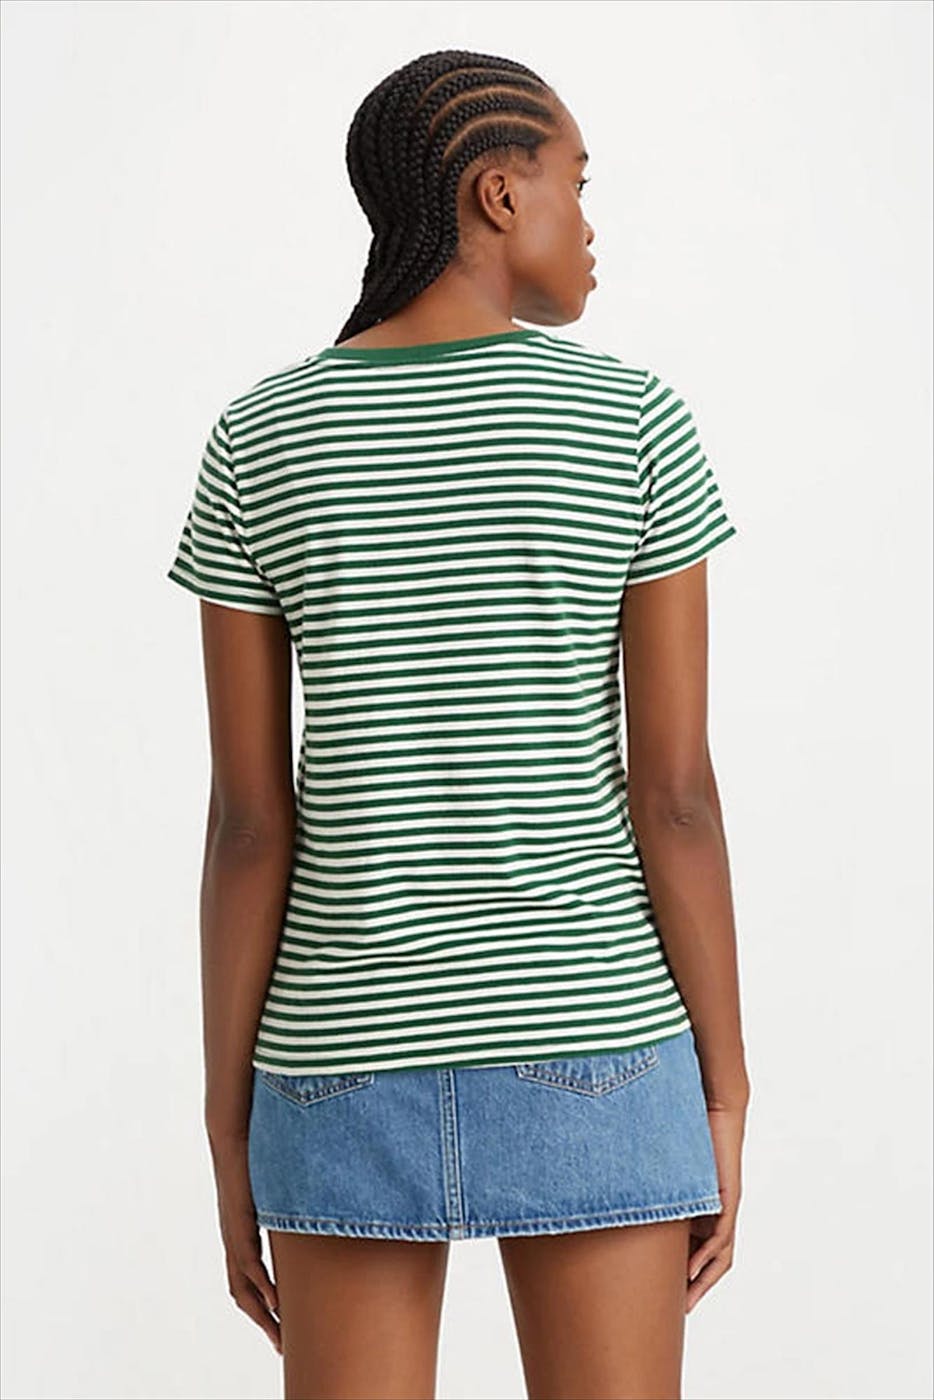 Levi's - Groen-witte Marine T-shirt